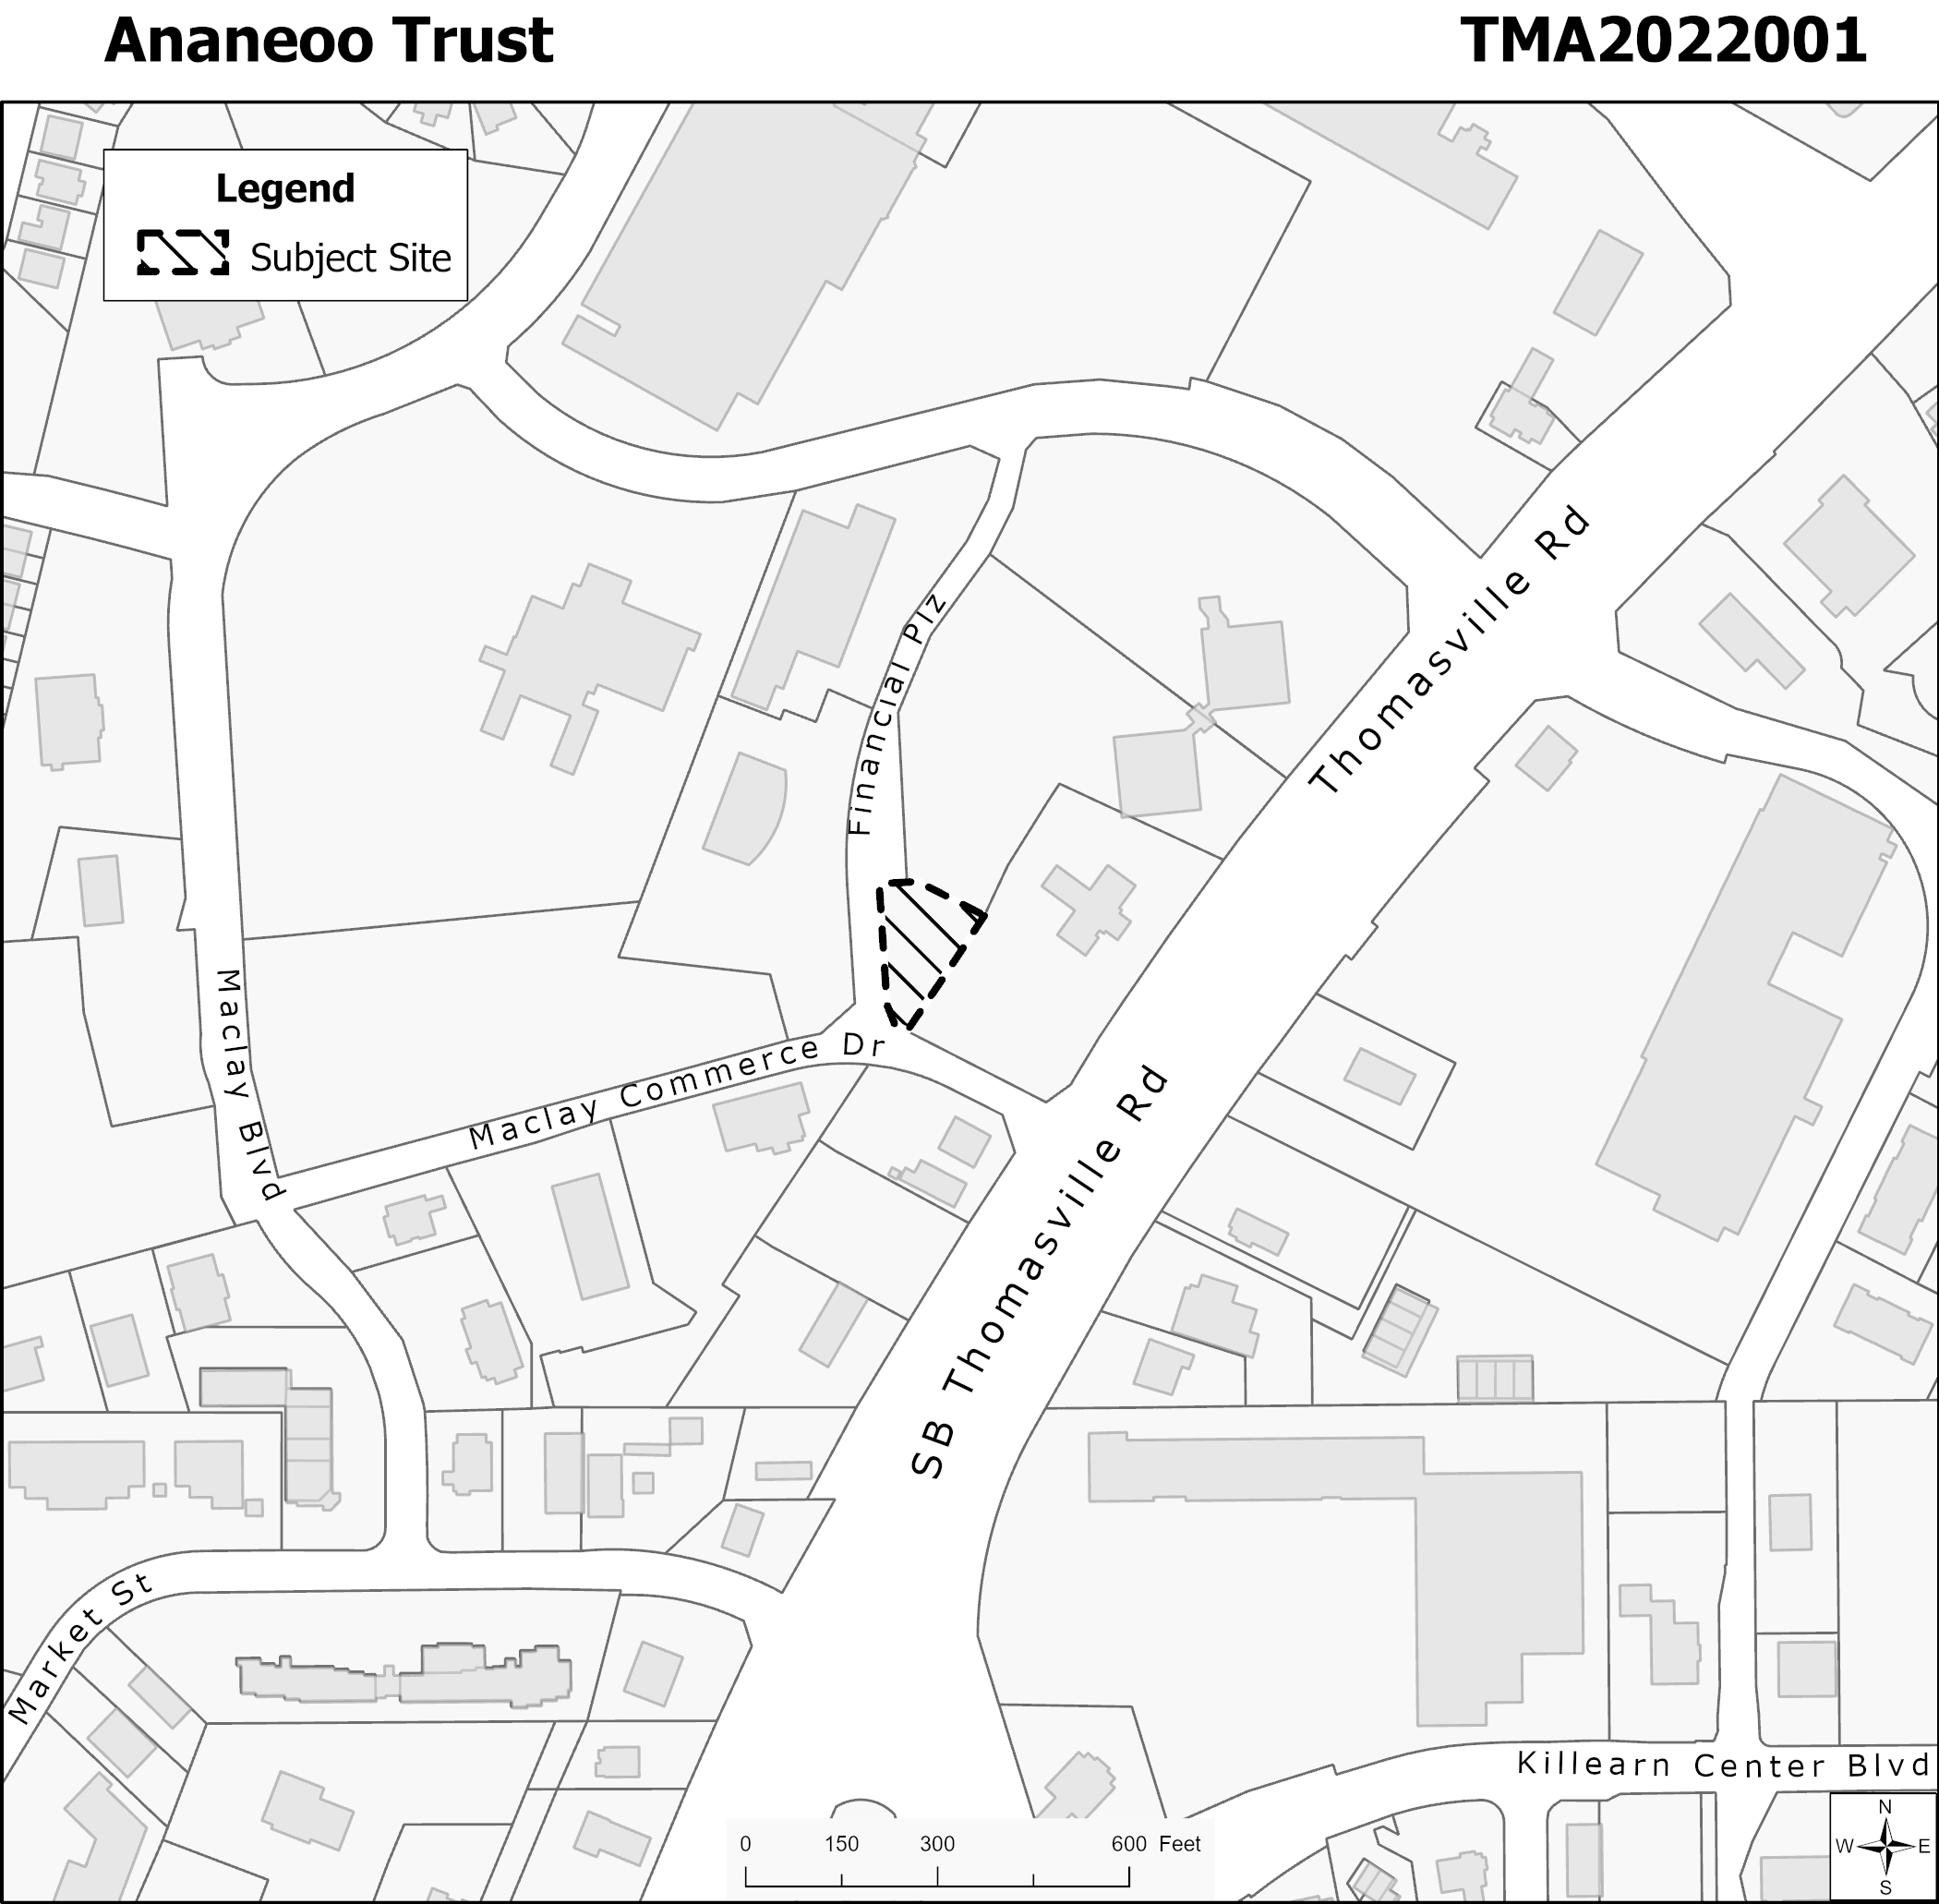 Ananeoo Trust (TMA2022001)